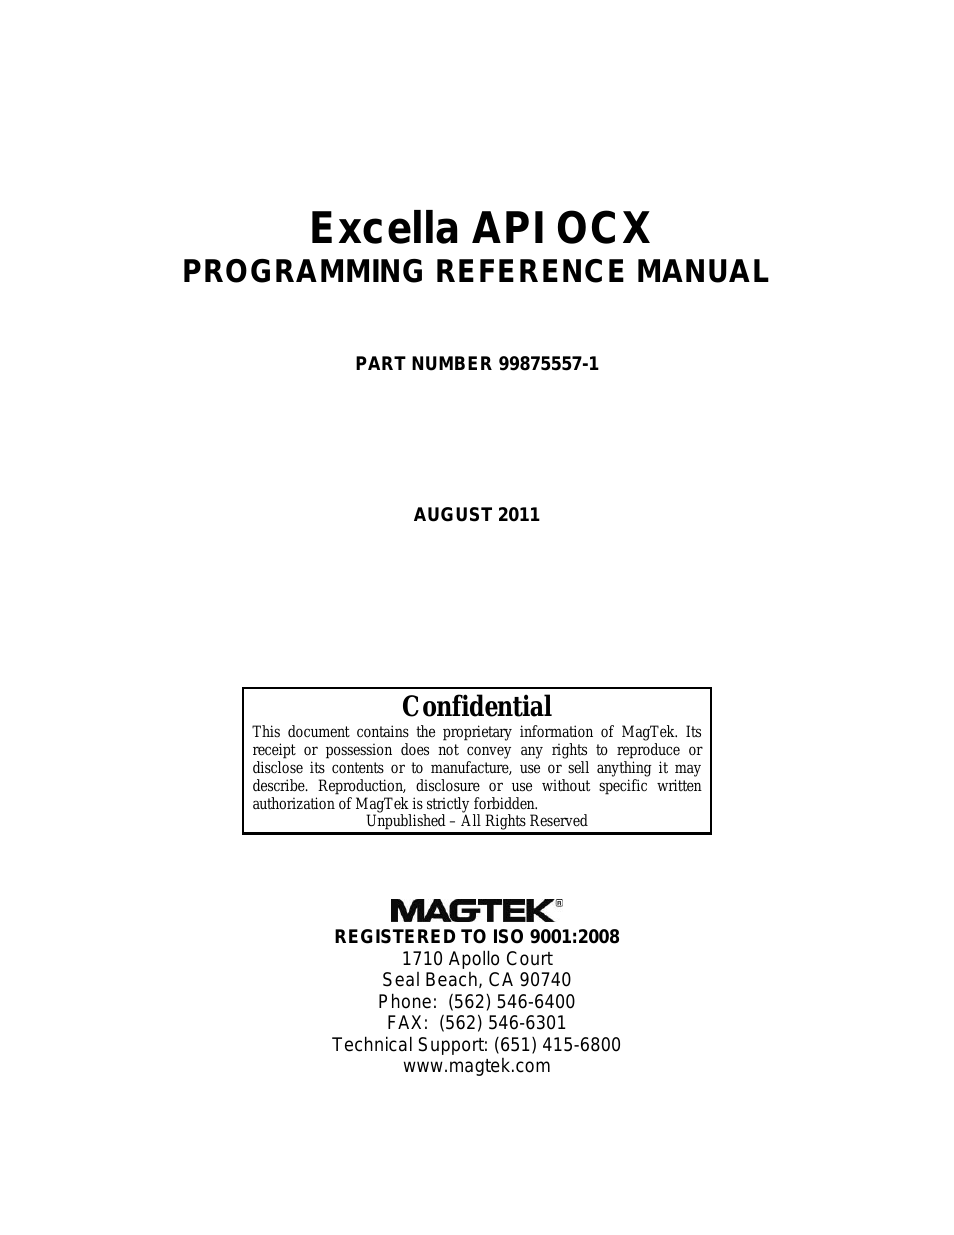 Excella API OCX99875557